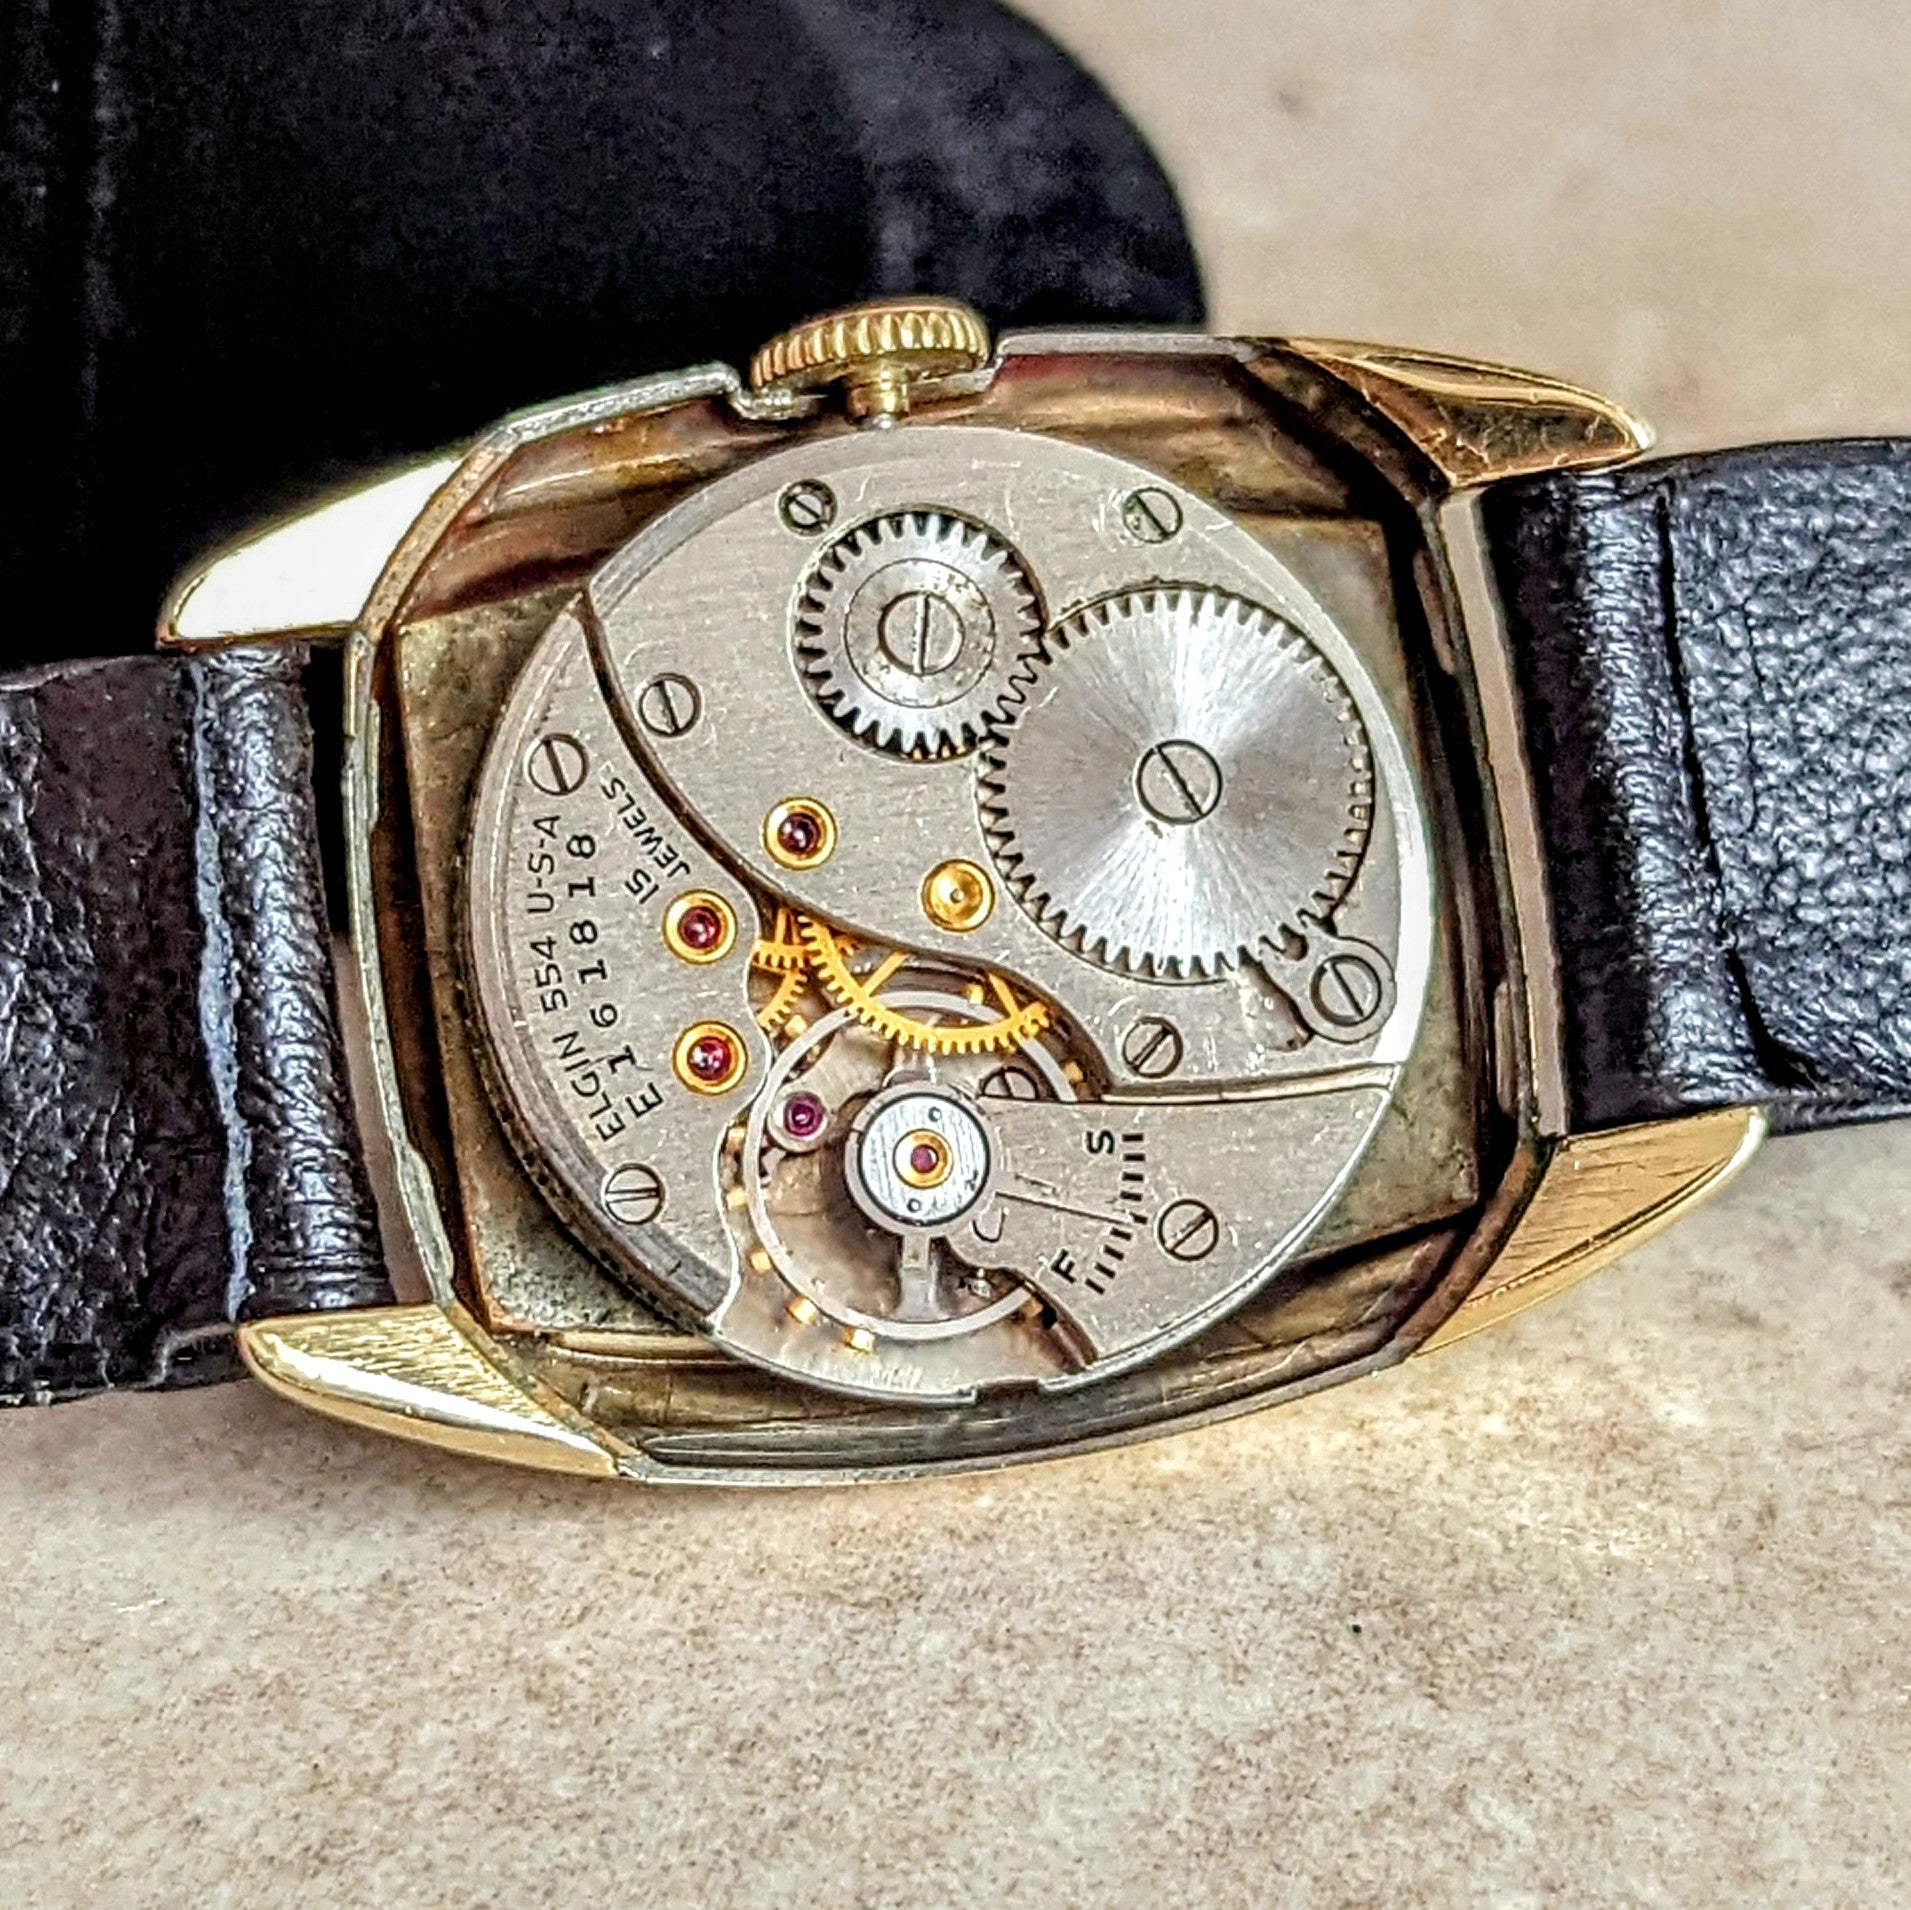 1941 ELGIN Watch Grade 554 Model 7 15 Jewels U.S.A Made Vintage Wristwatch